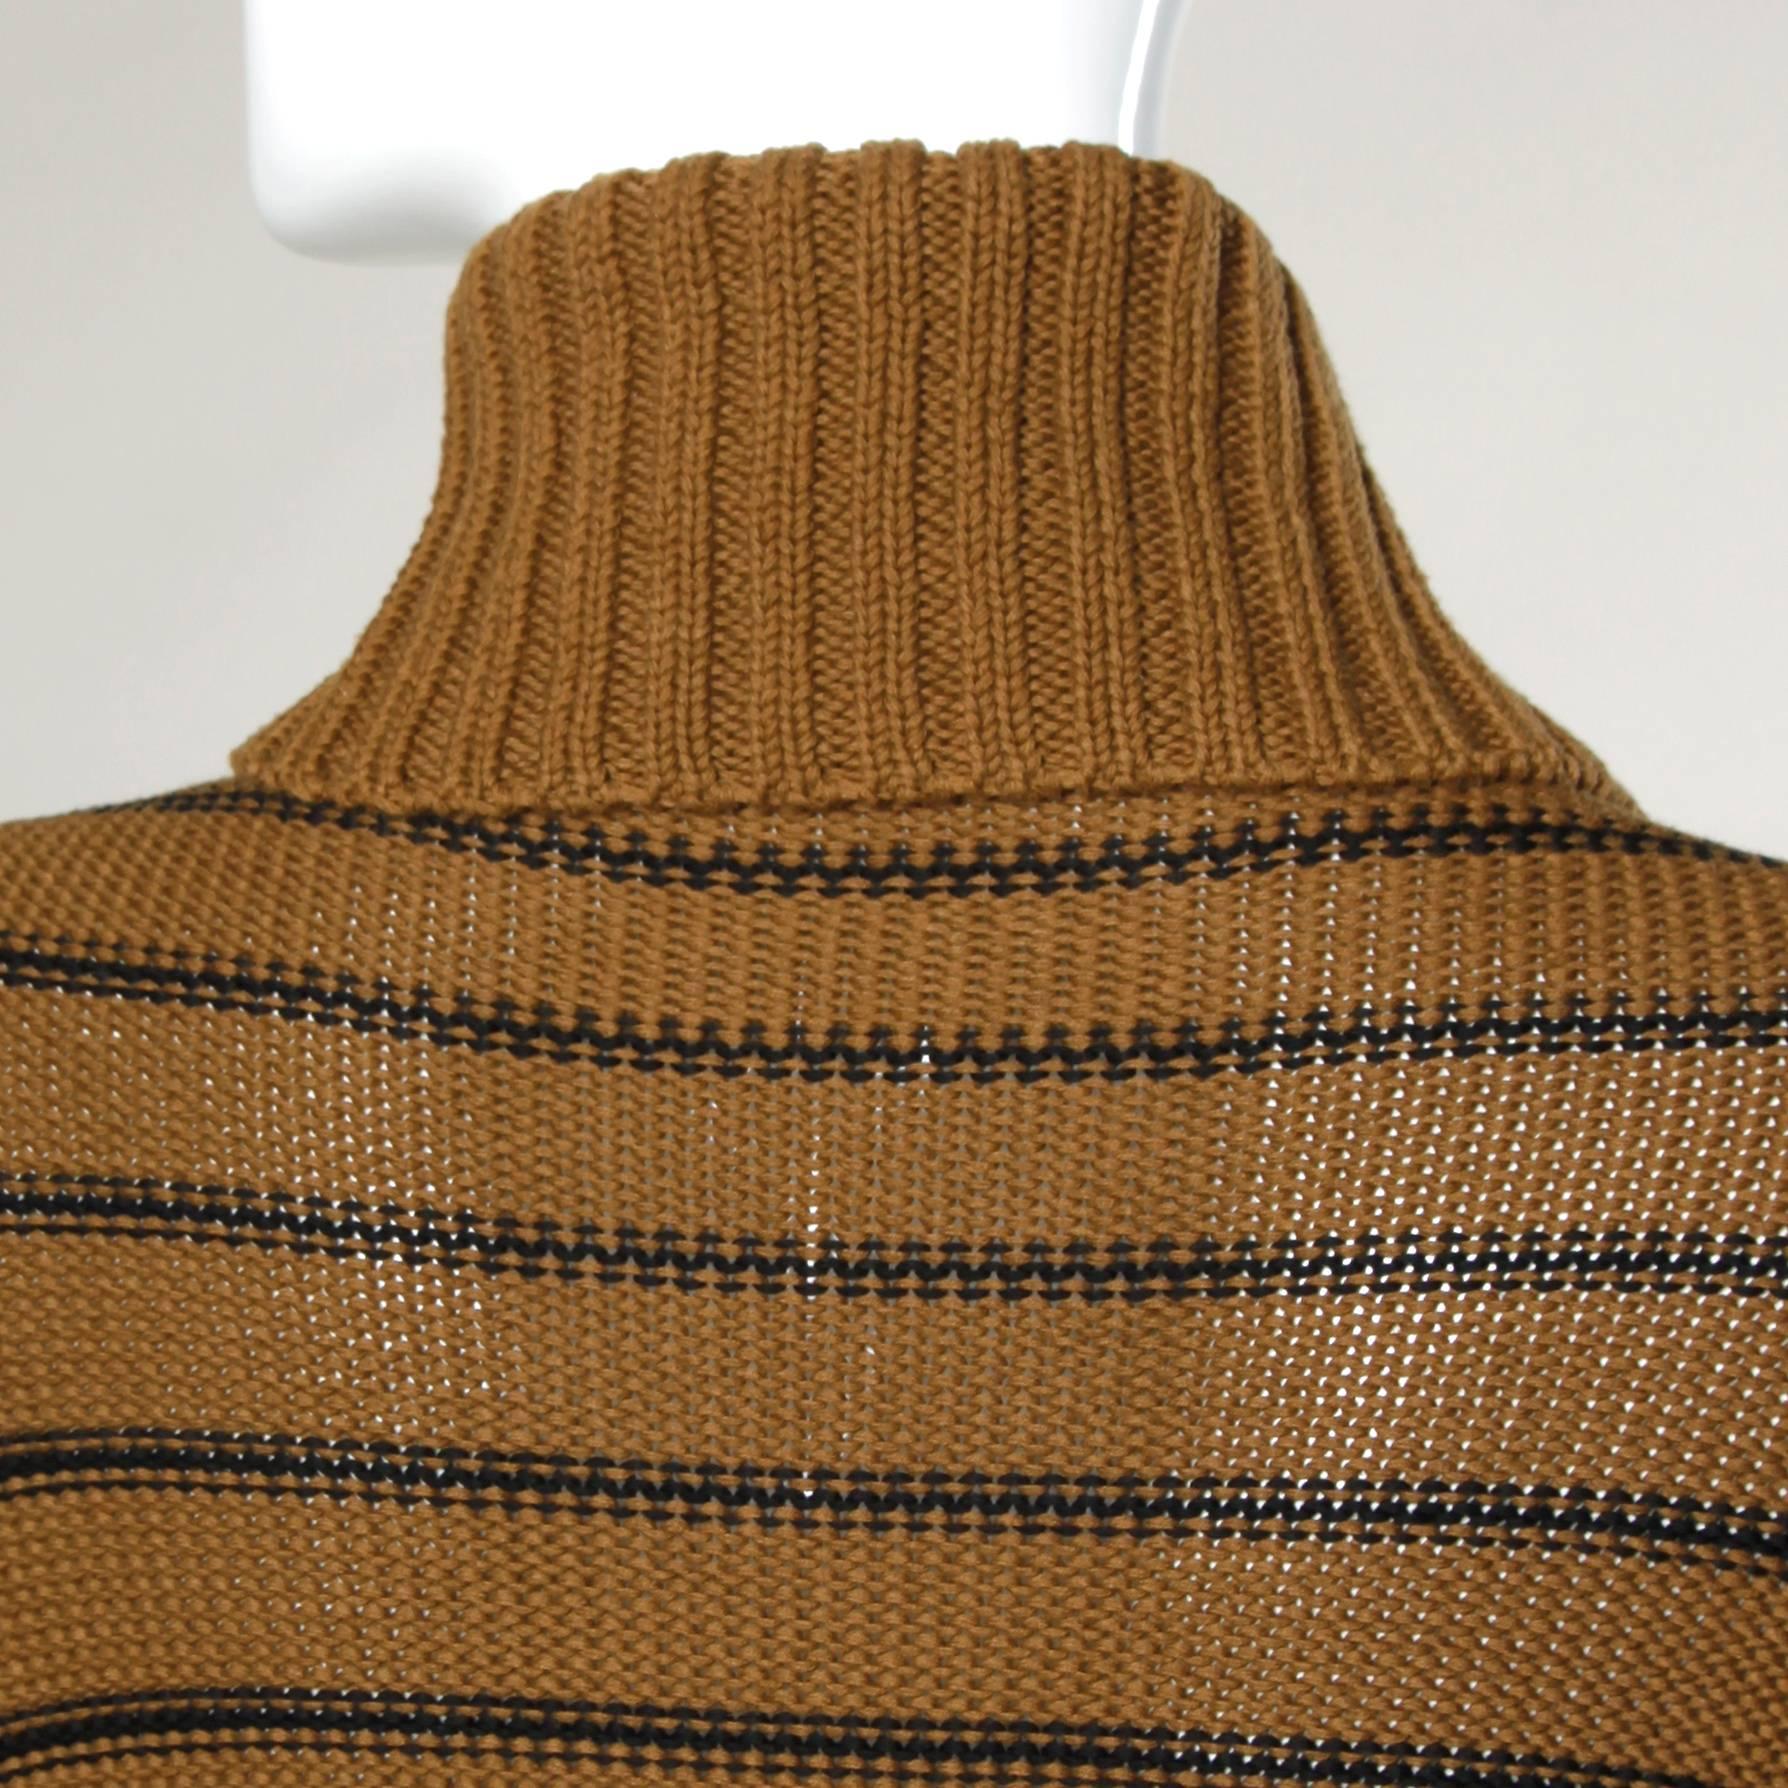 Sonia Rykiel Brown Striped Knit Cardigan Sweater with Black Cherries Design 1